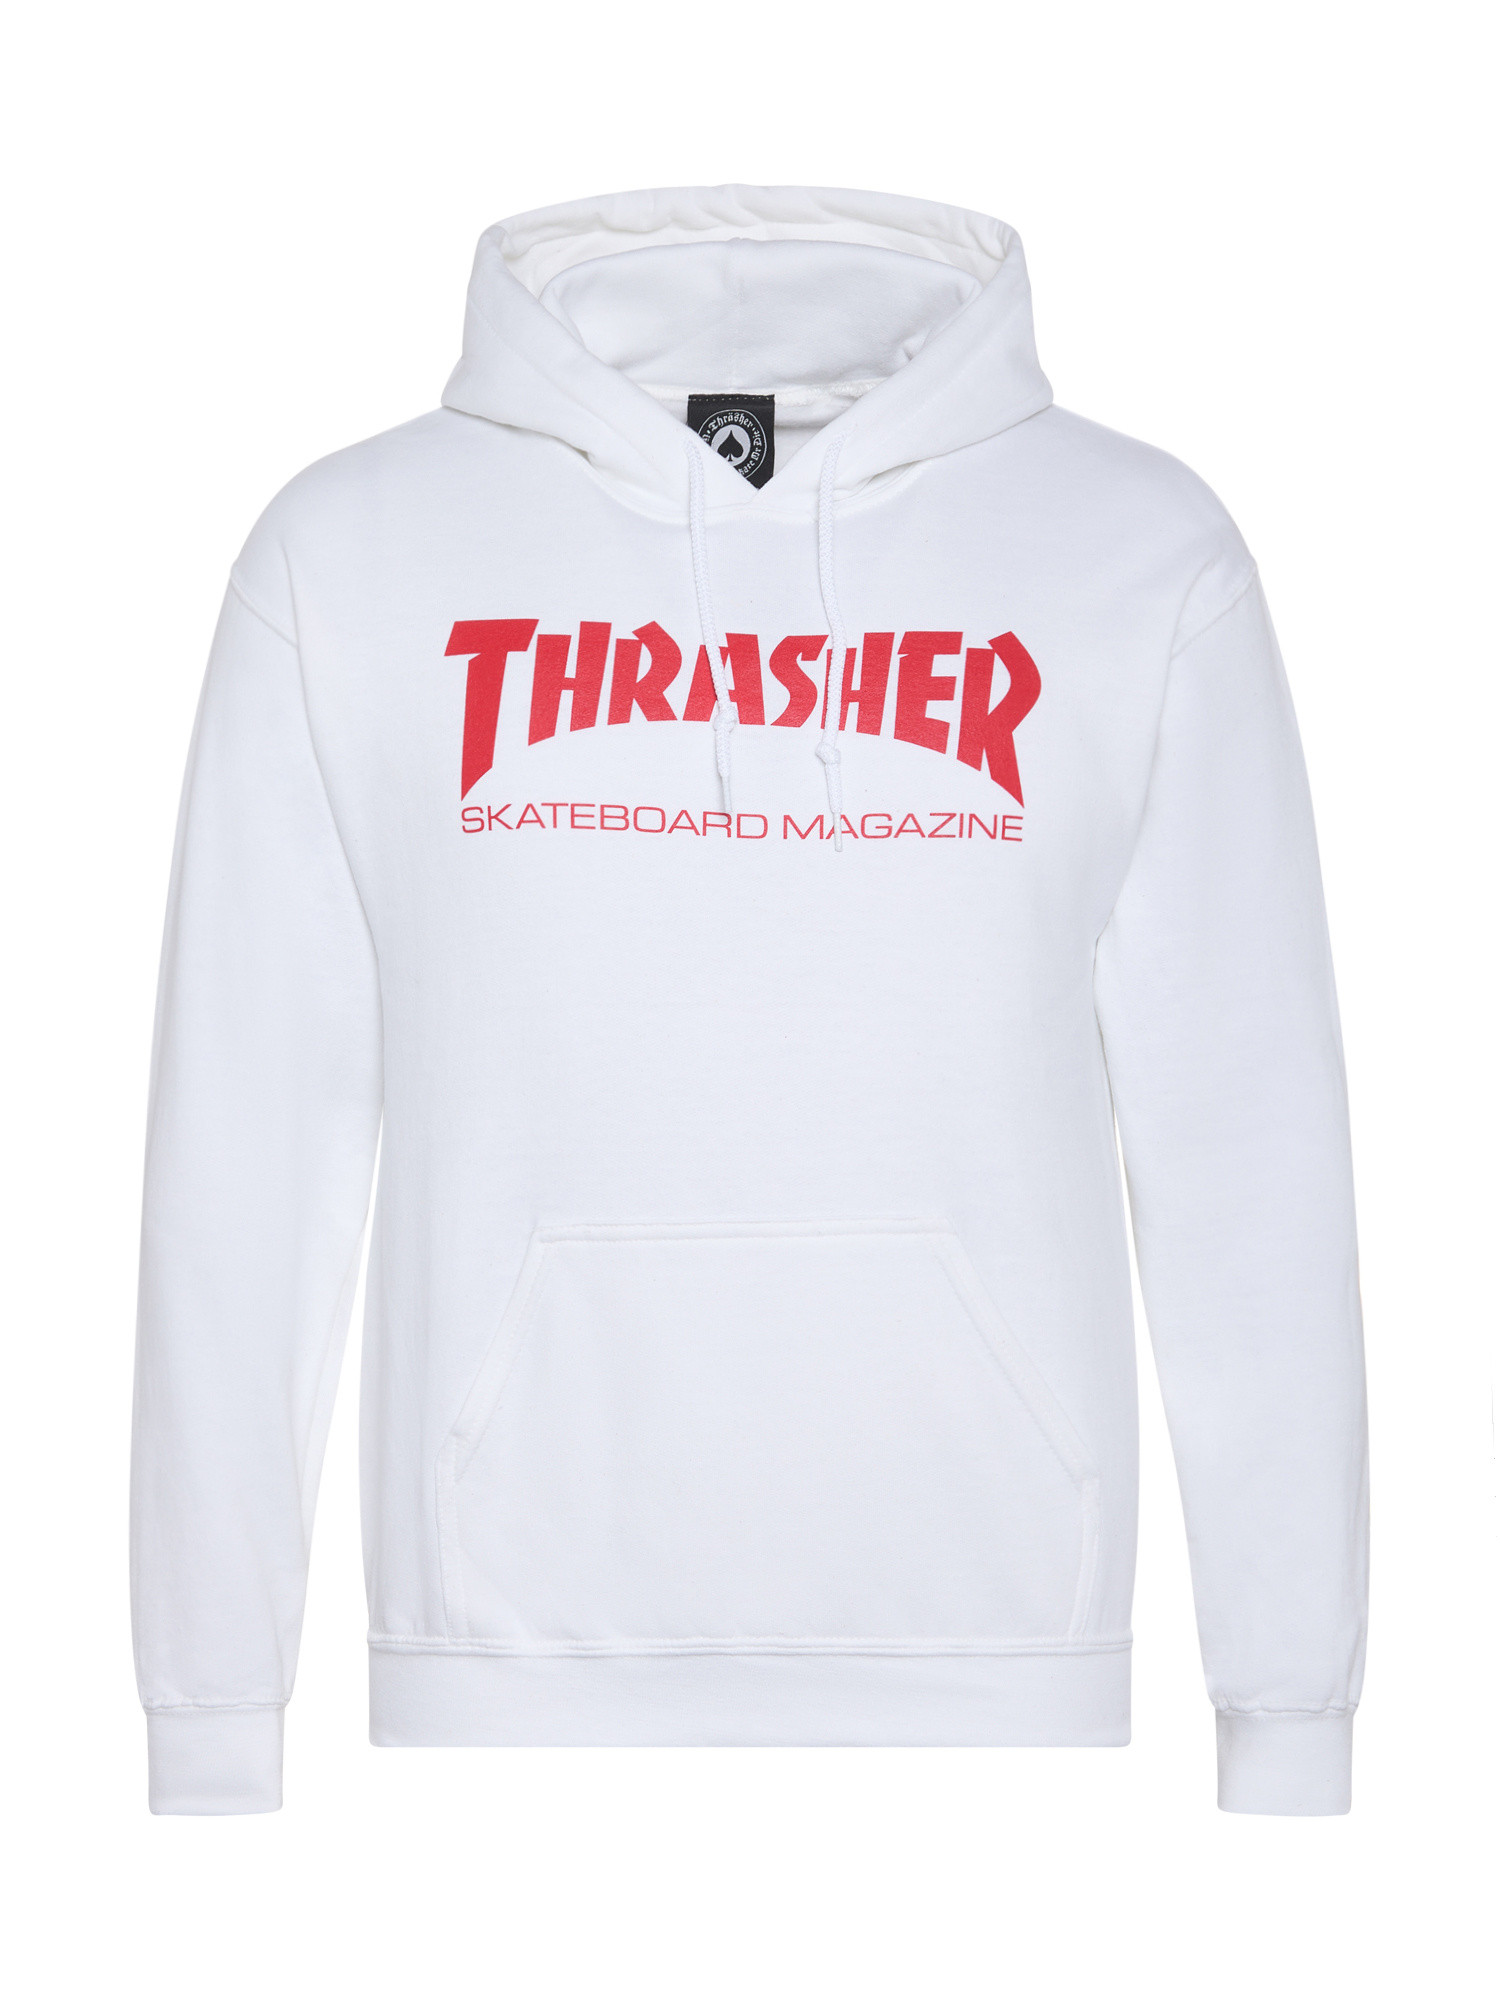 Thrasher - Skate magazine logo hoodie, White, large image number 0